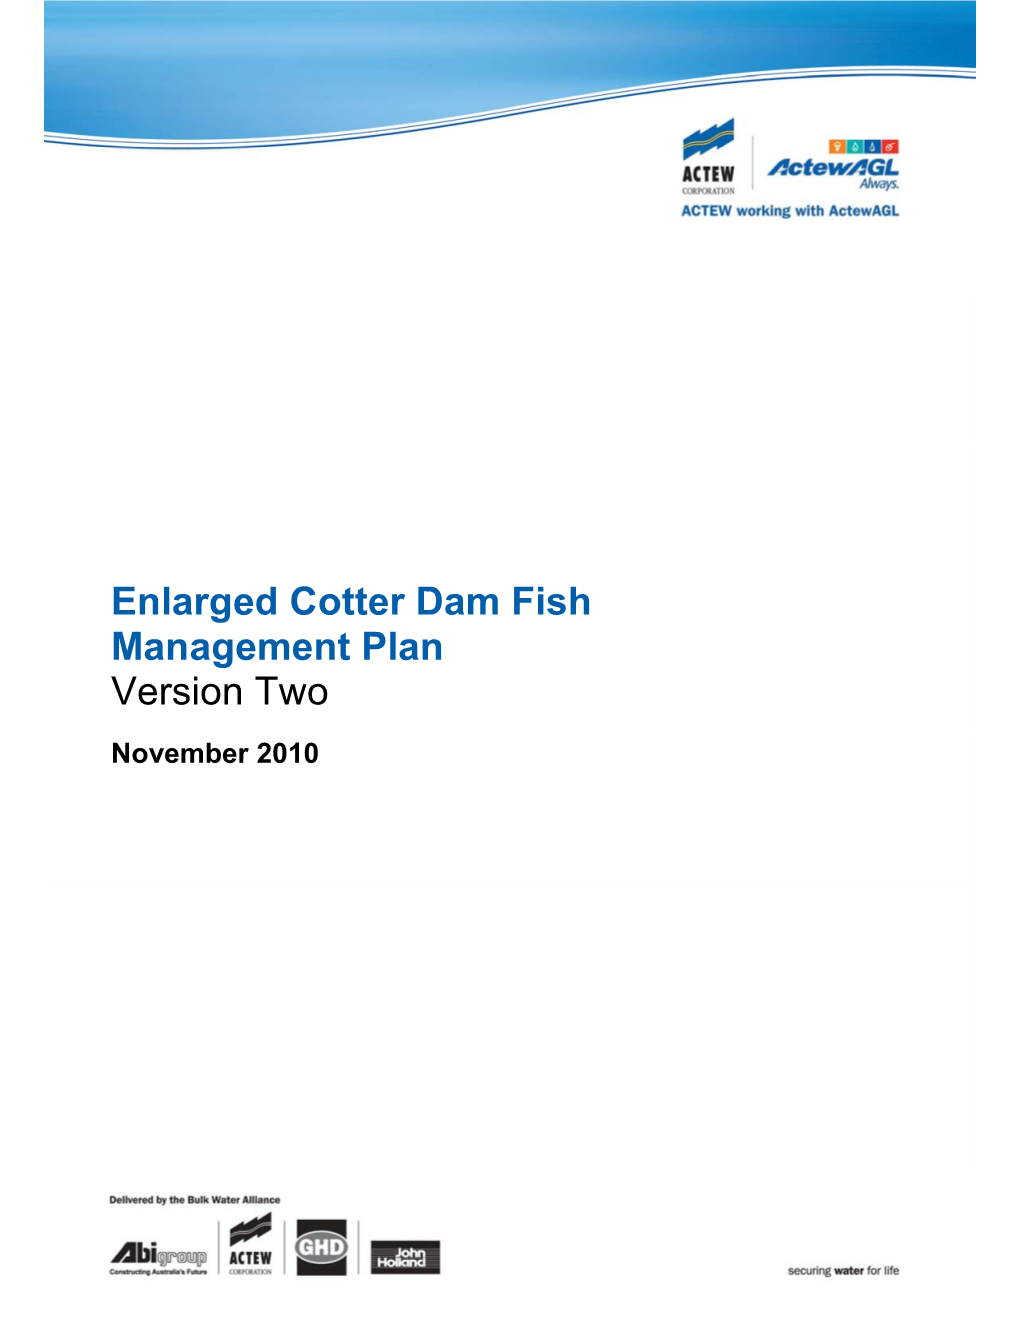 Enlarged Cotter Dam Fish Management Plan Version Two November 2010